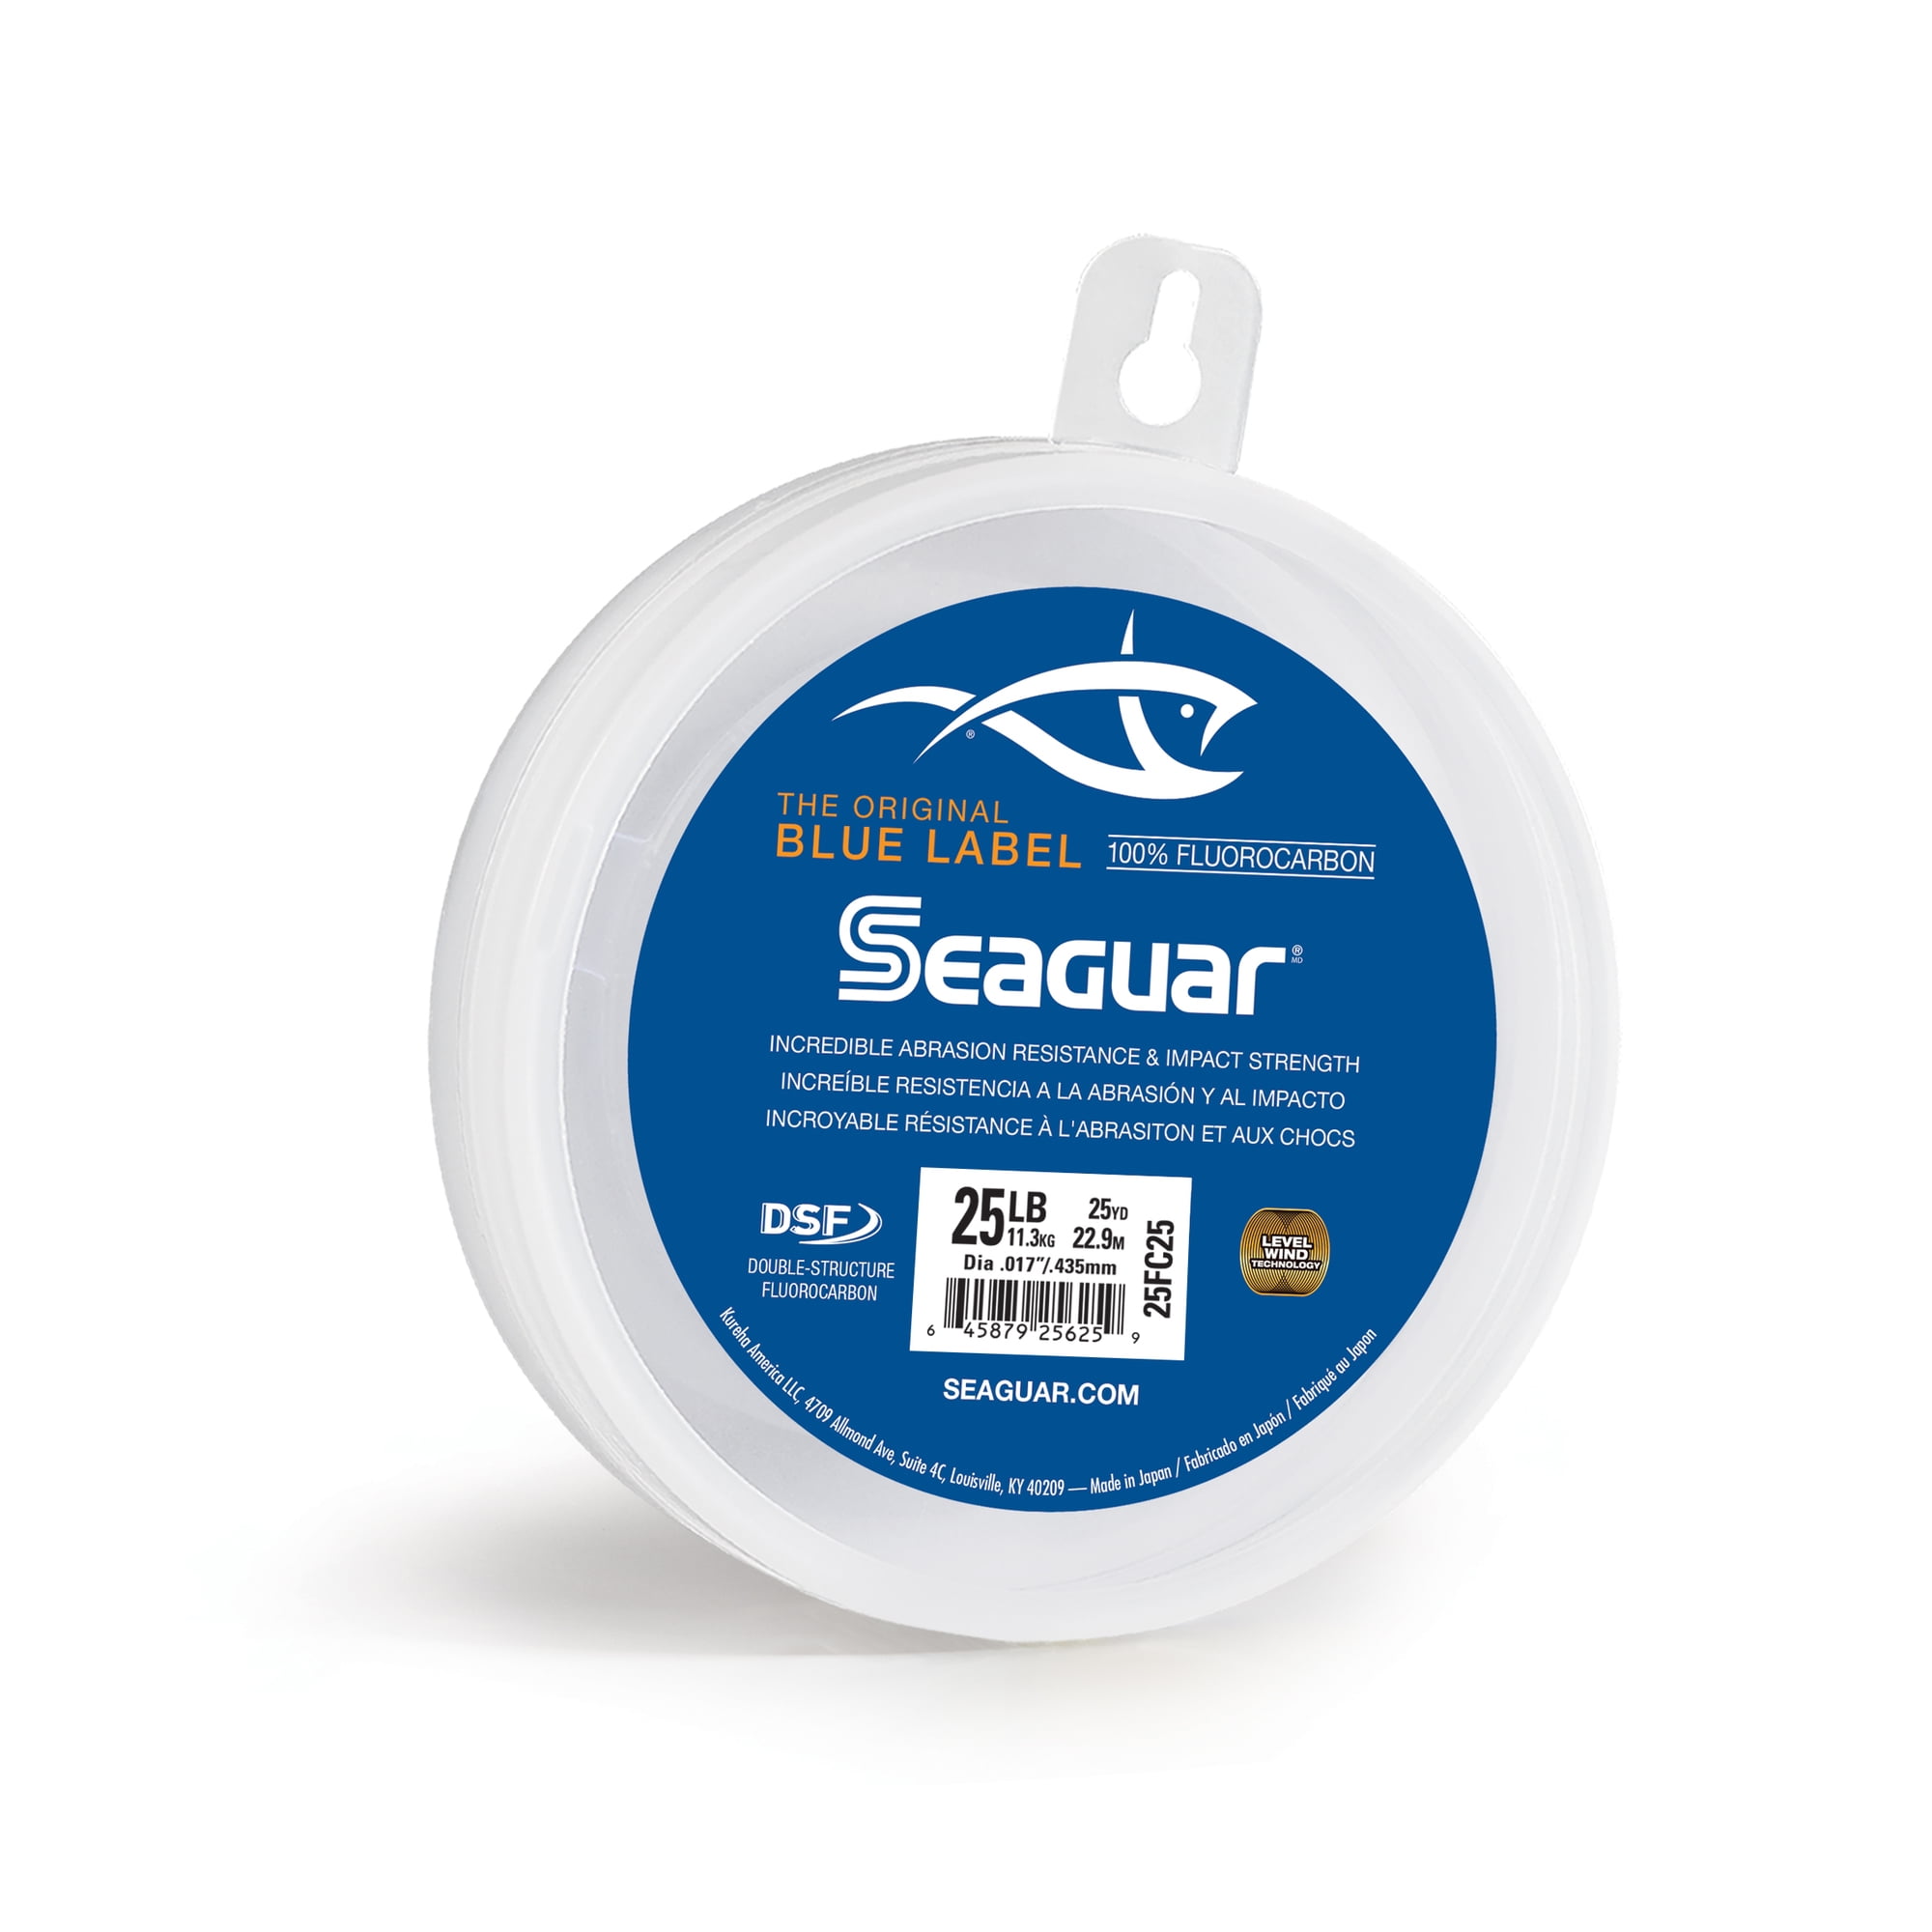 Seaguar Pink Label Fluorocarbon Leader Freshwater & Saltwater Fishing Line 25Y 